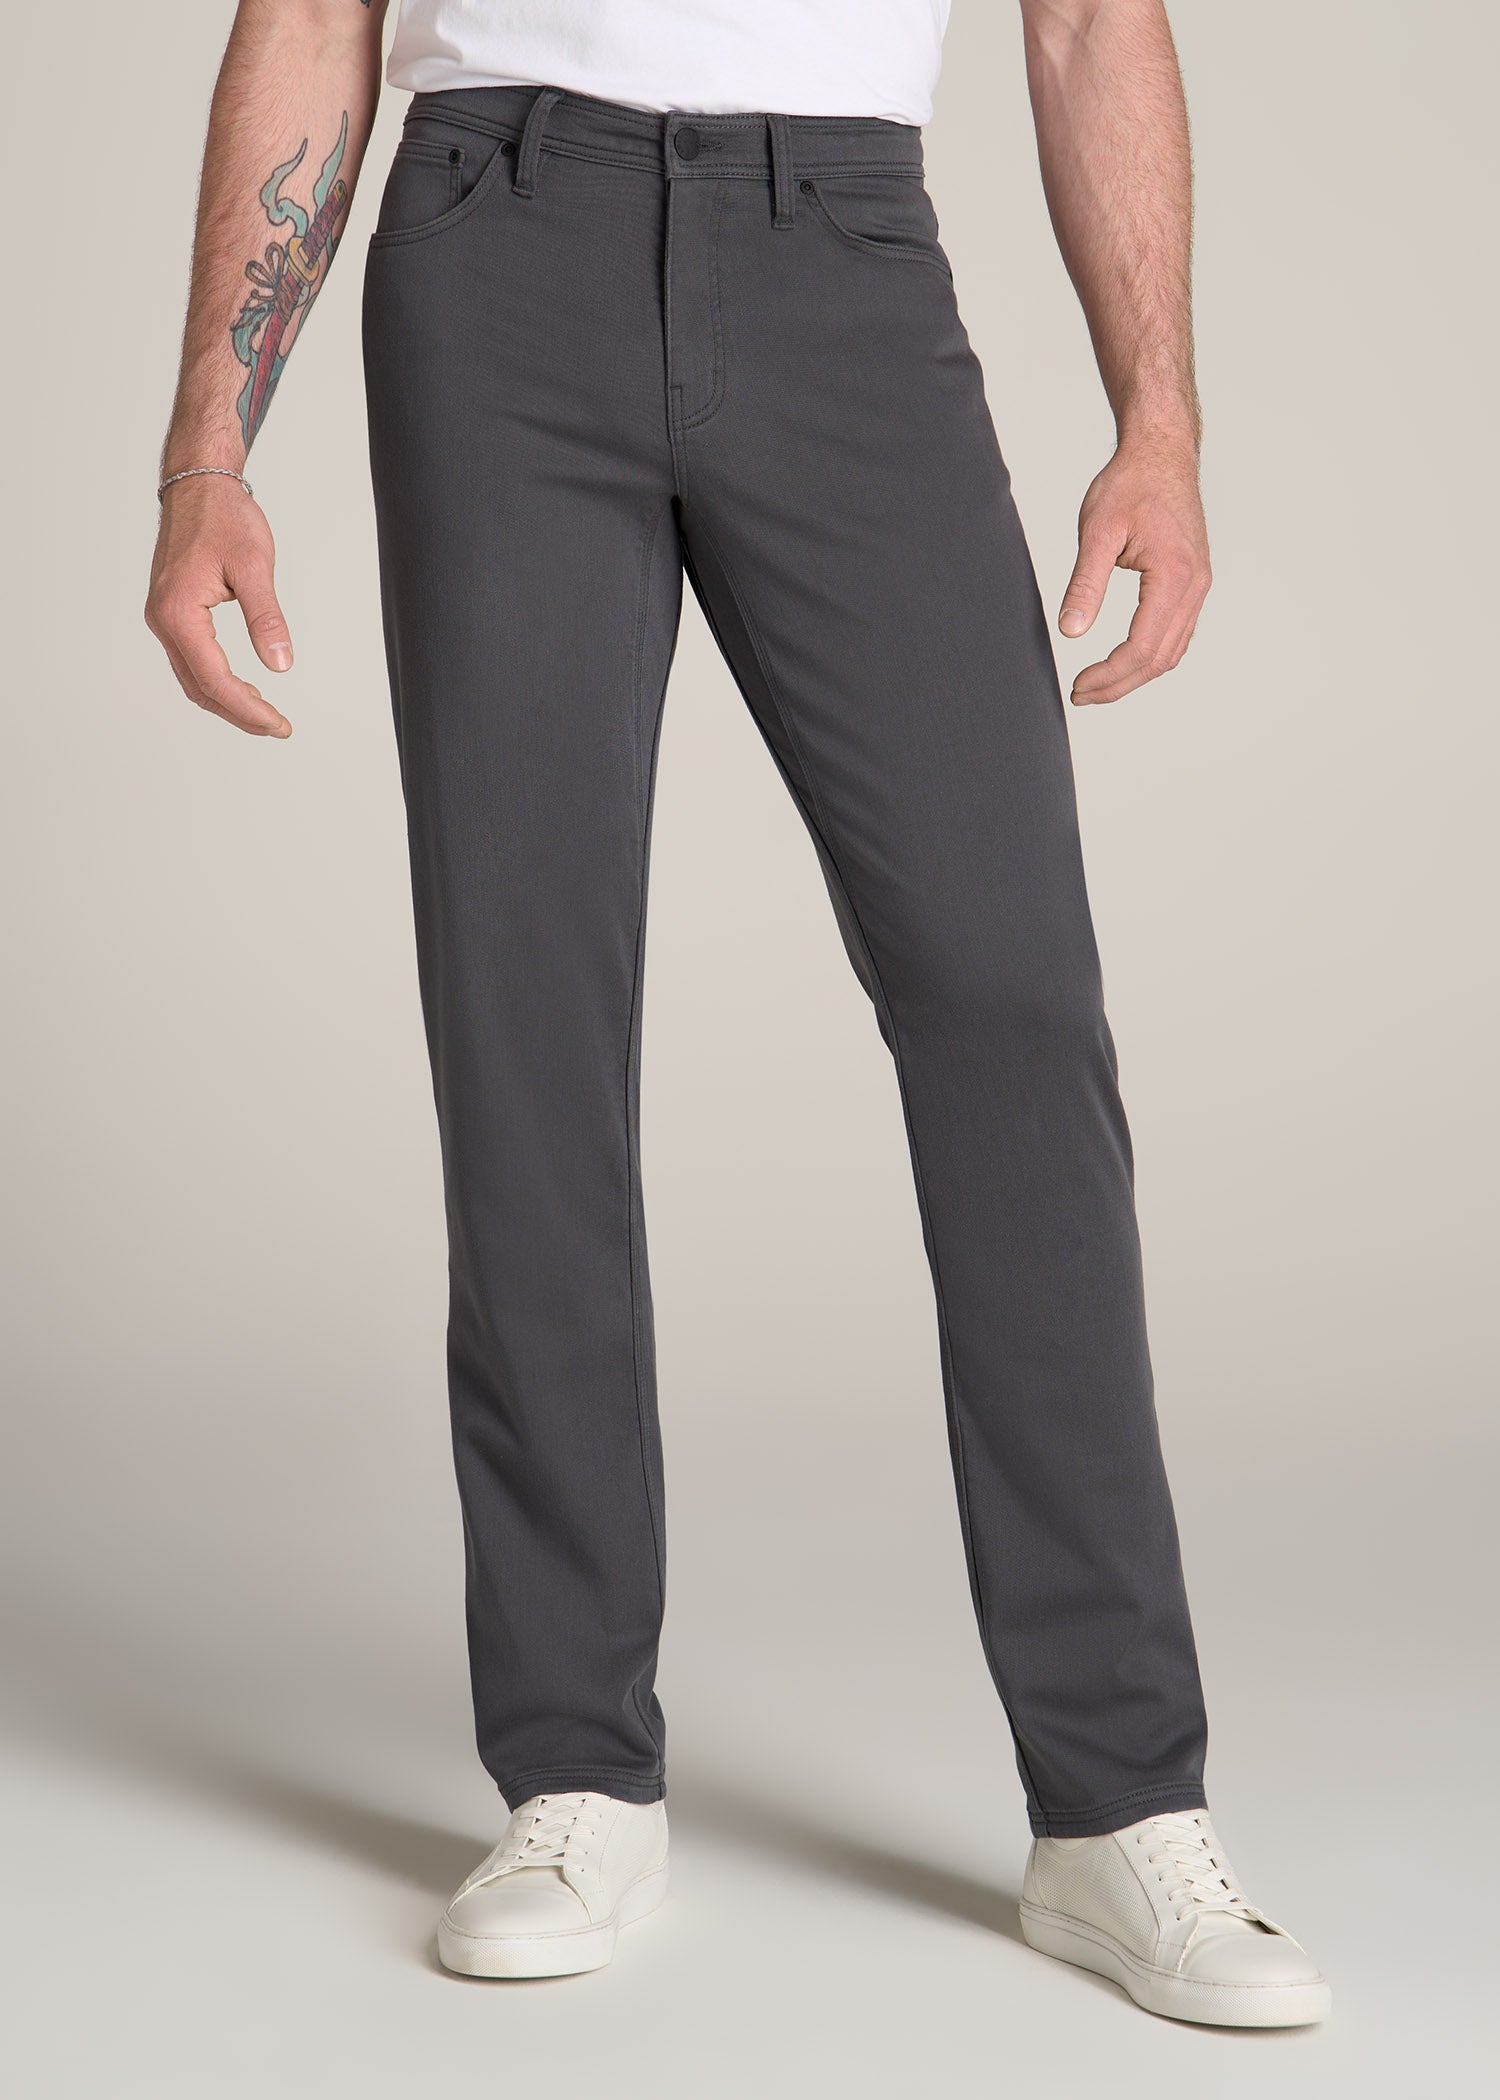 Vintage straight five-pocket pant